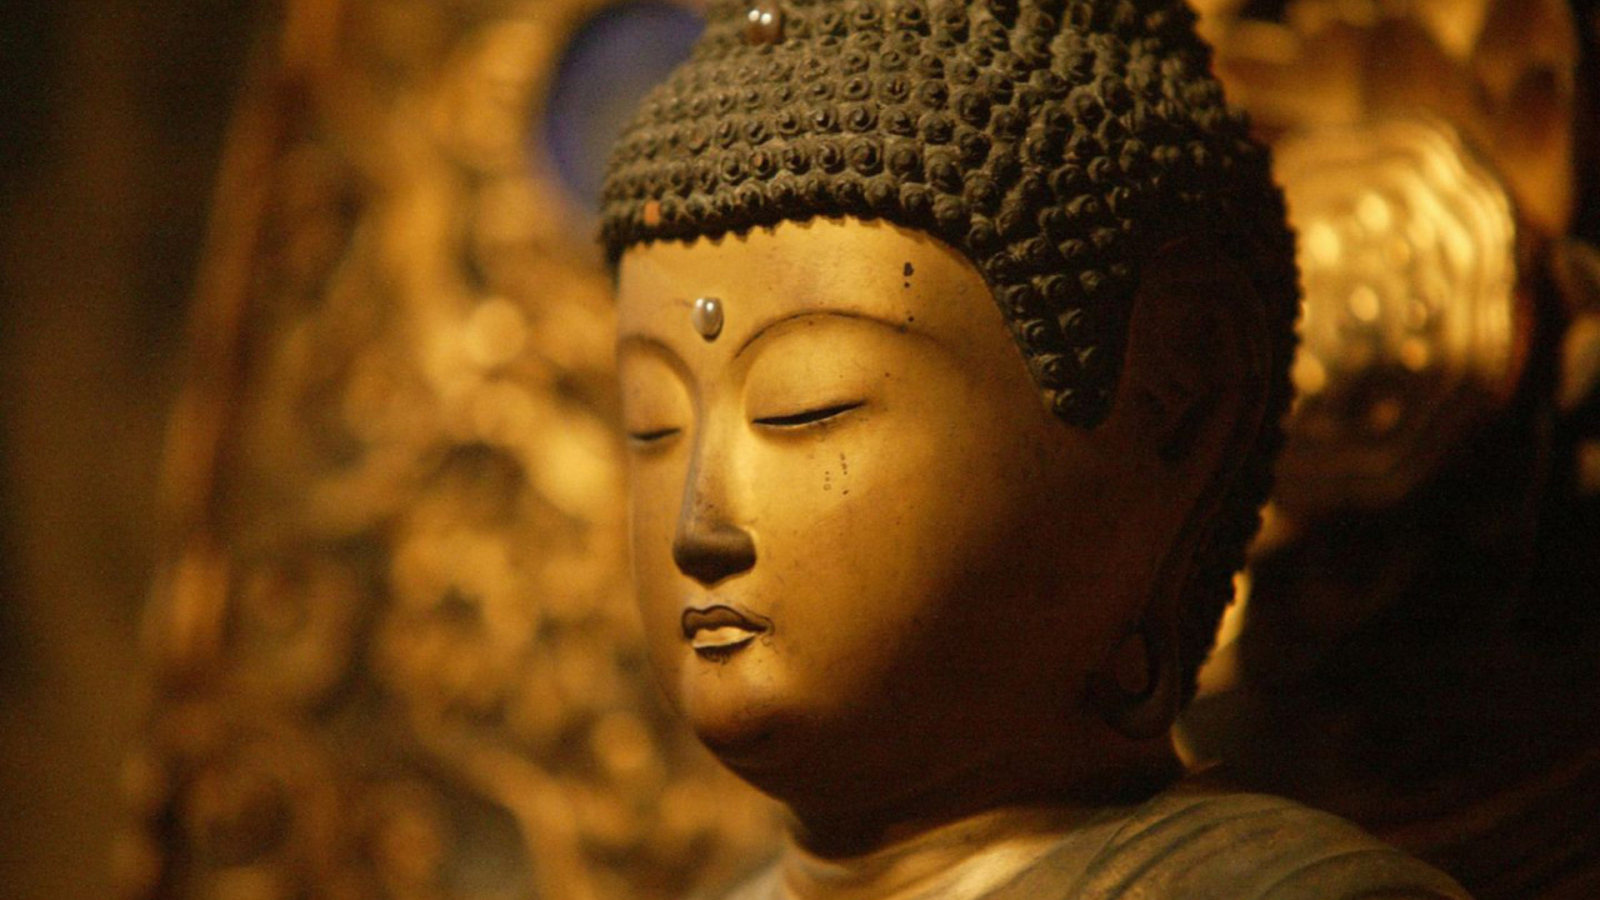 Buddha with eyes closed